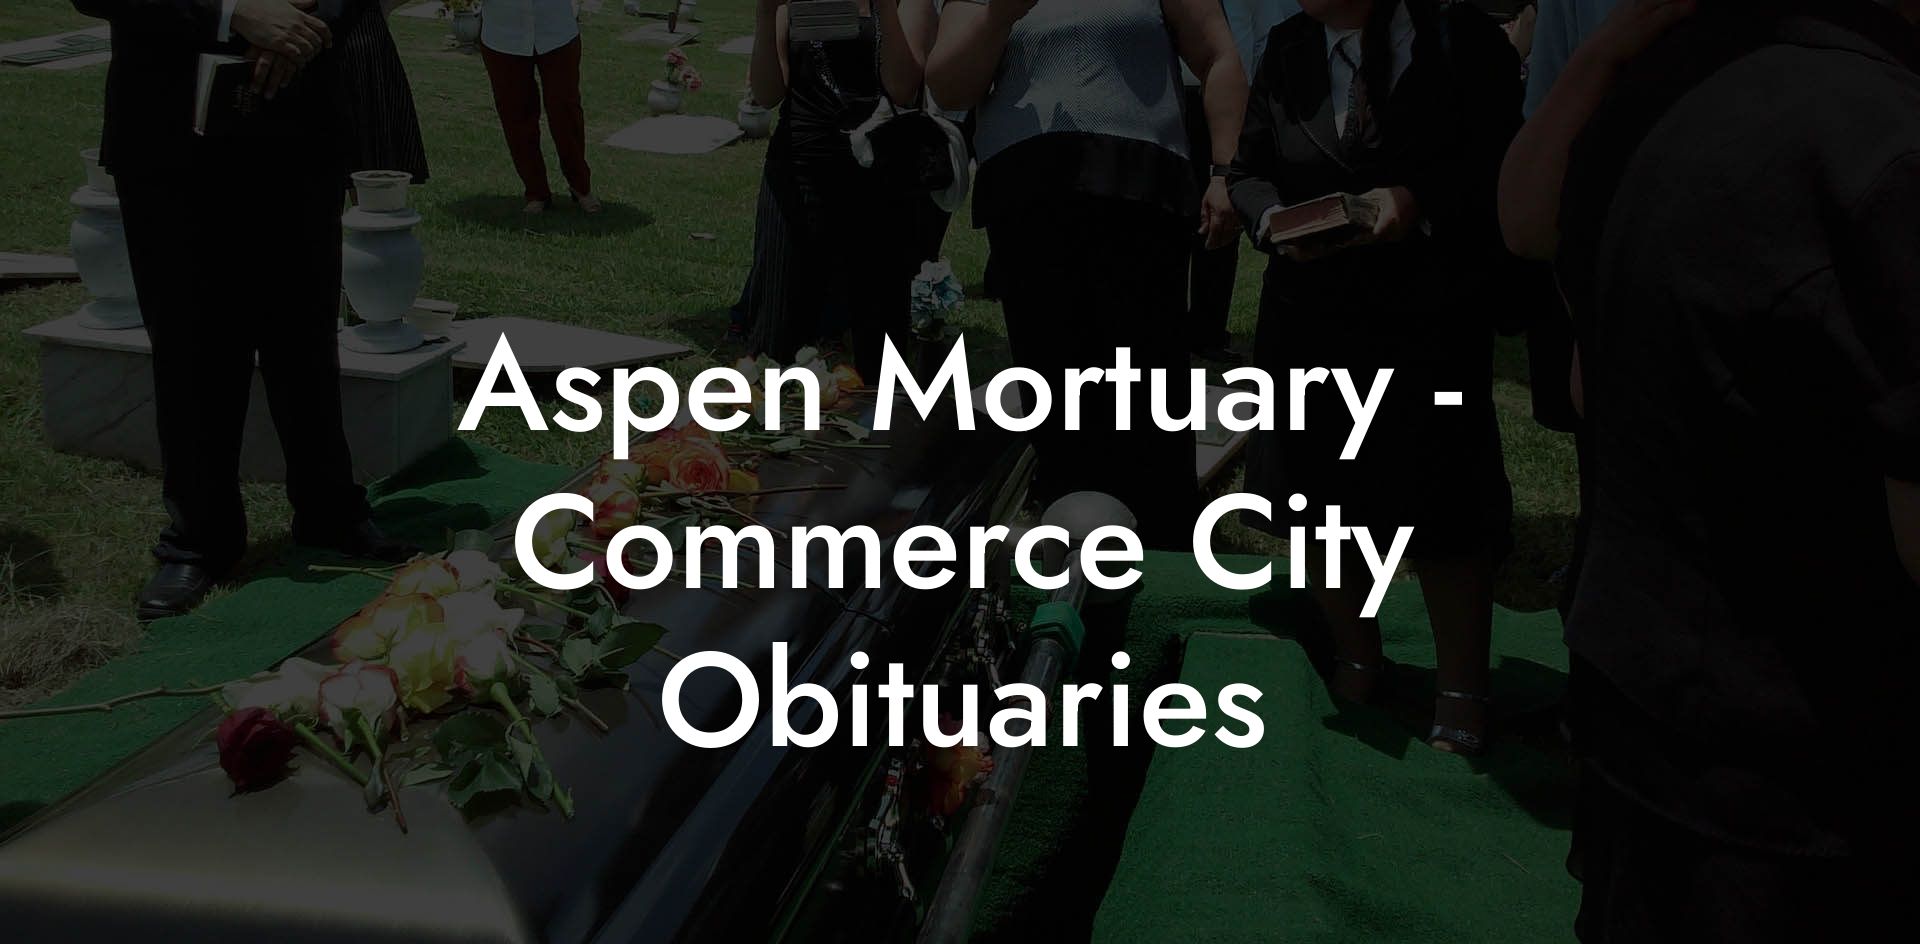 Aspen Mortuary - Commerce City Obituaries